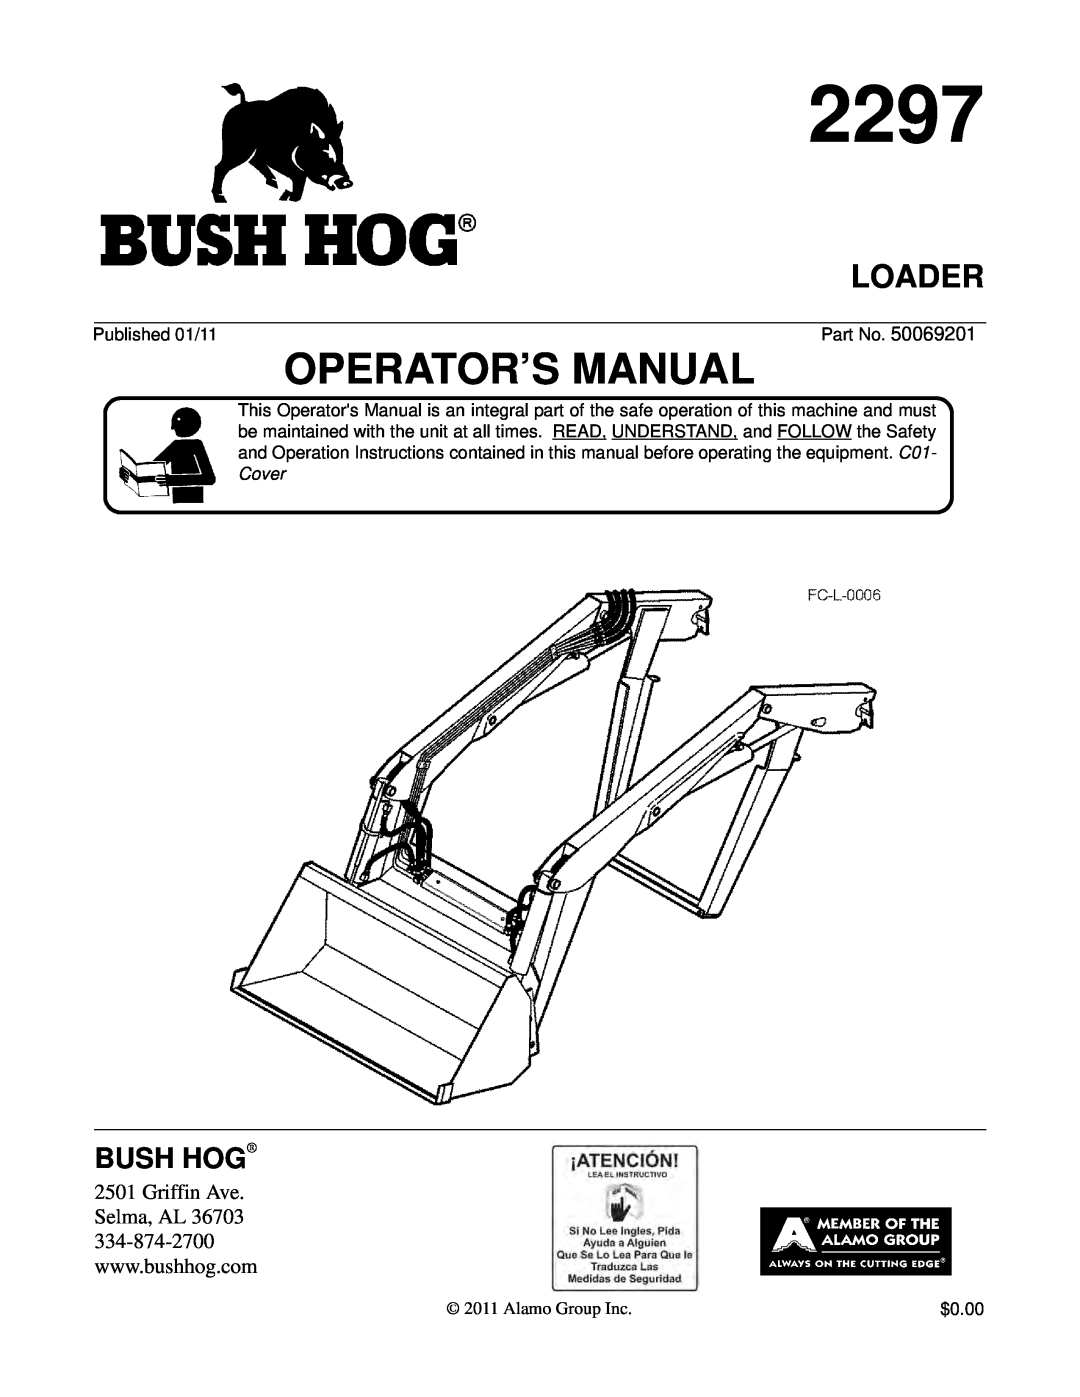 Bush Hog 2297 manual Loader, Operator’S Manual, Bush Hog 